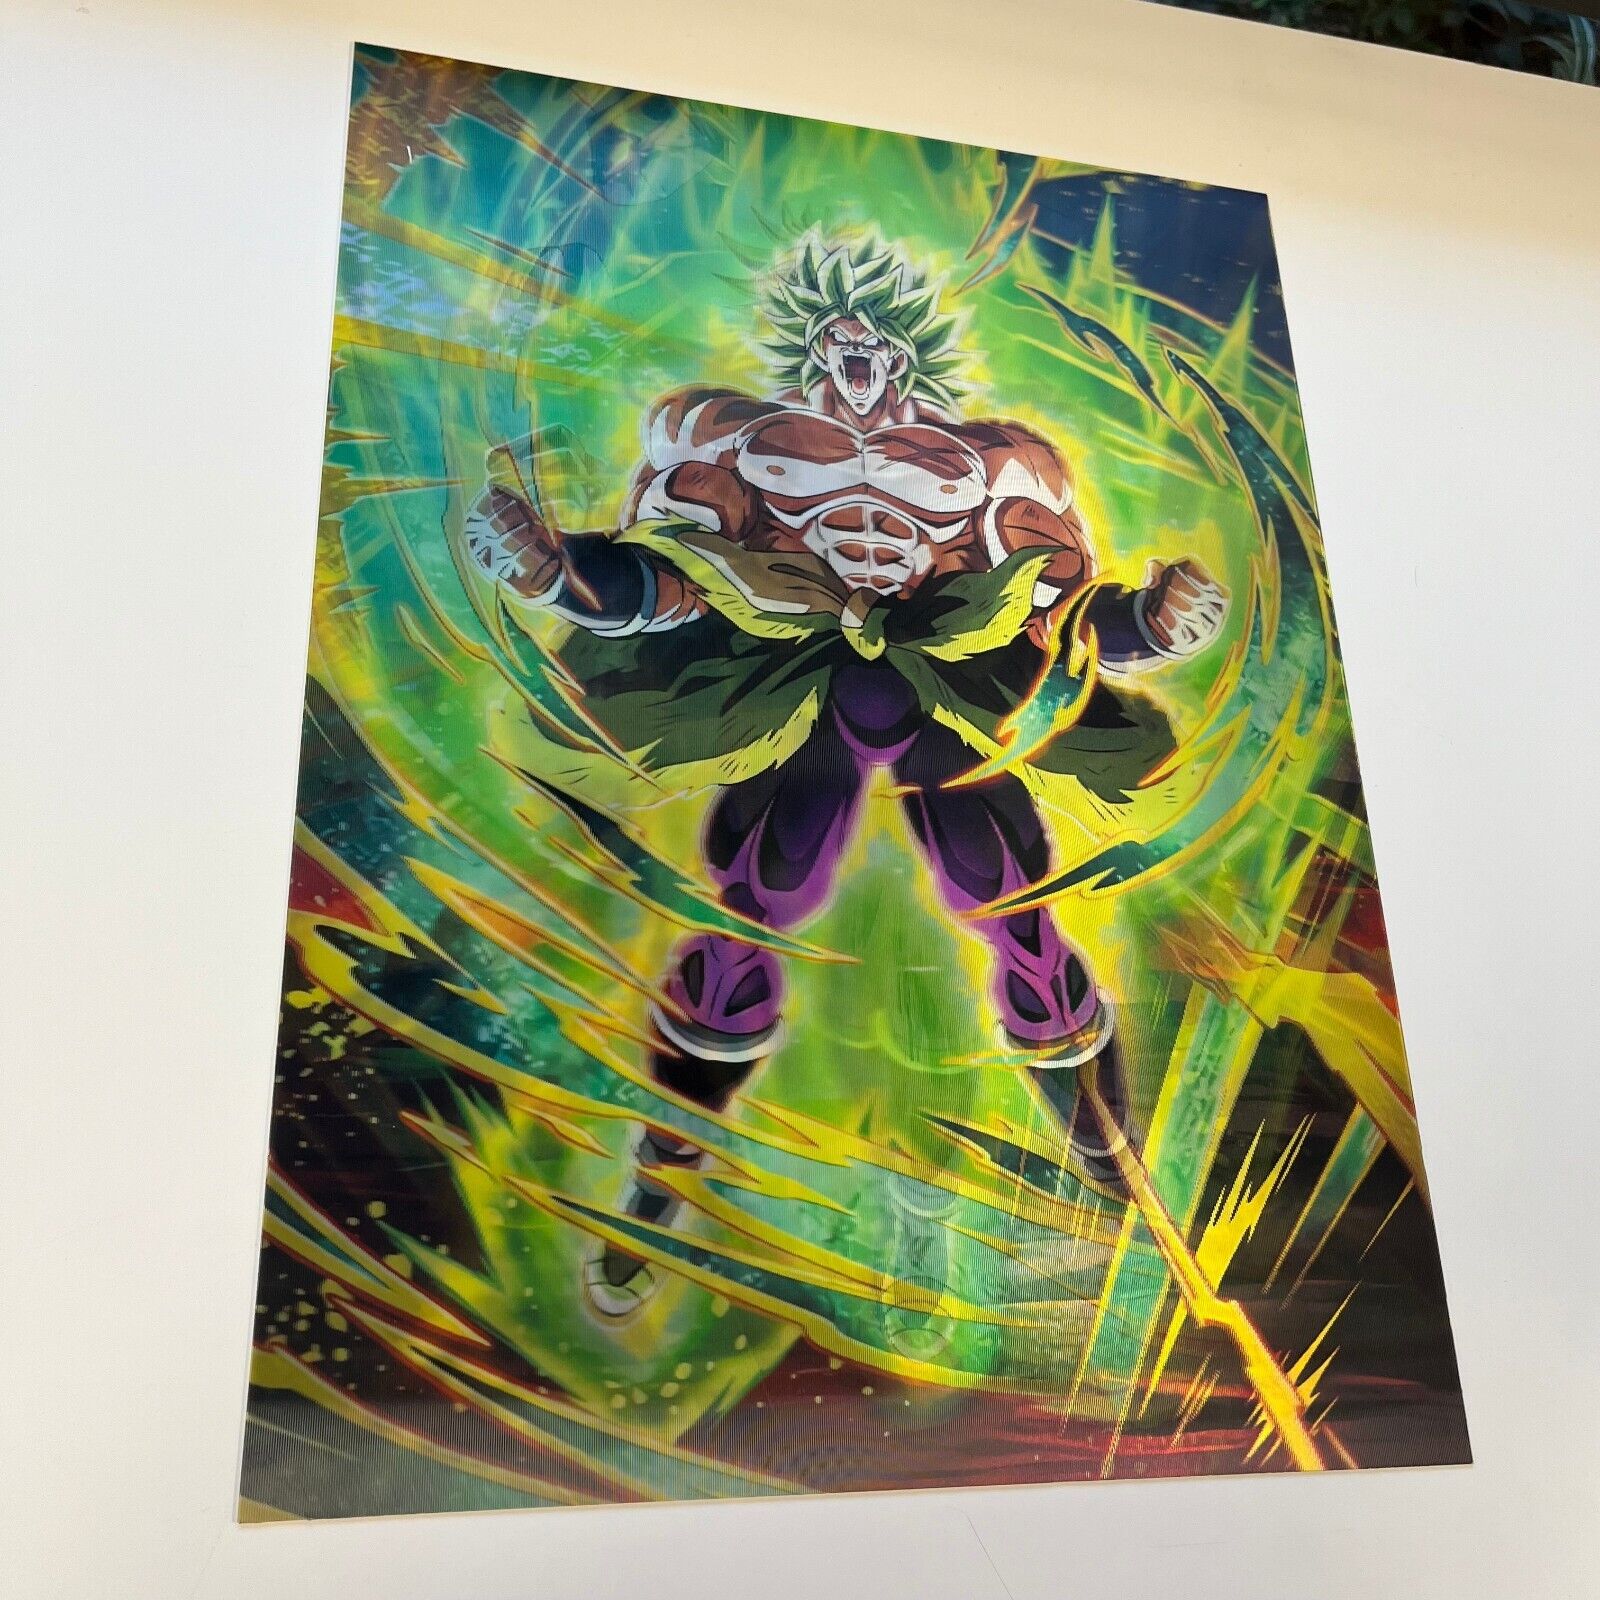 Dragon Ball Z 3D Holographic Lenticular Poster - Broly Legendary Saiyan